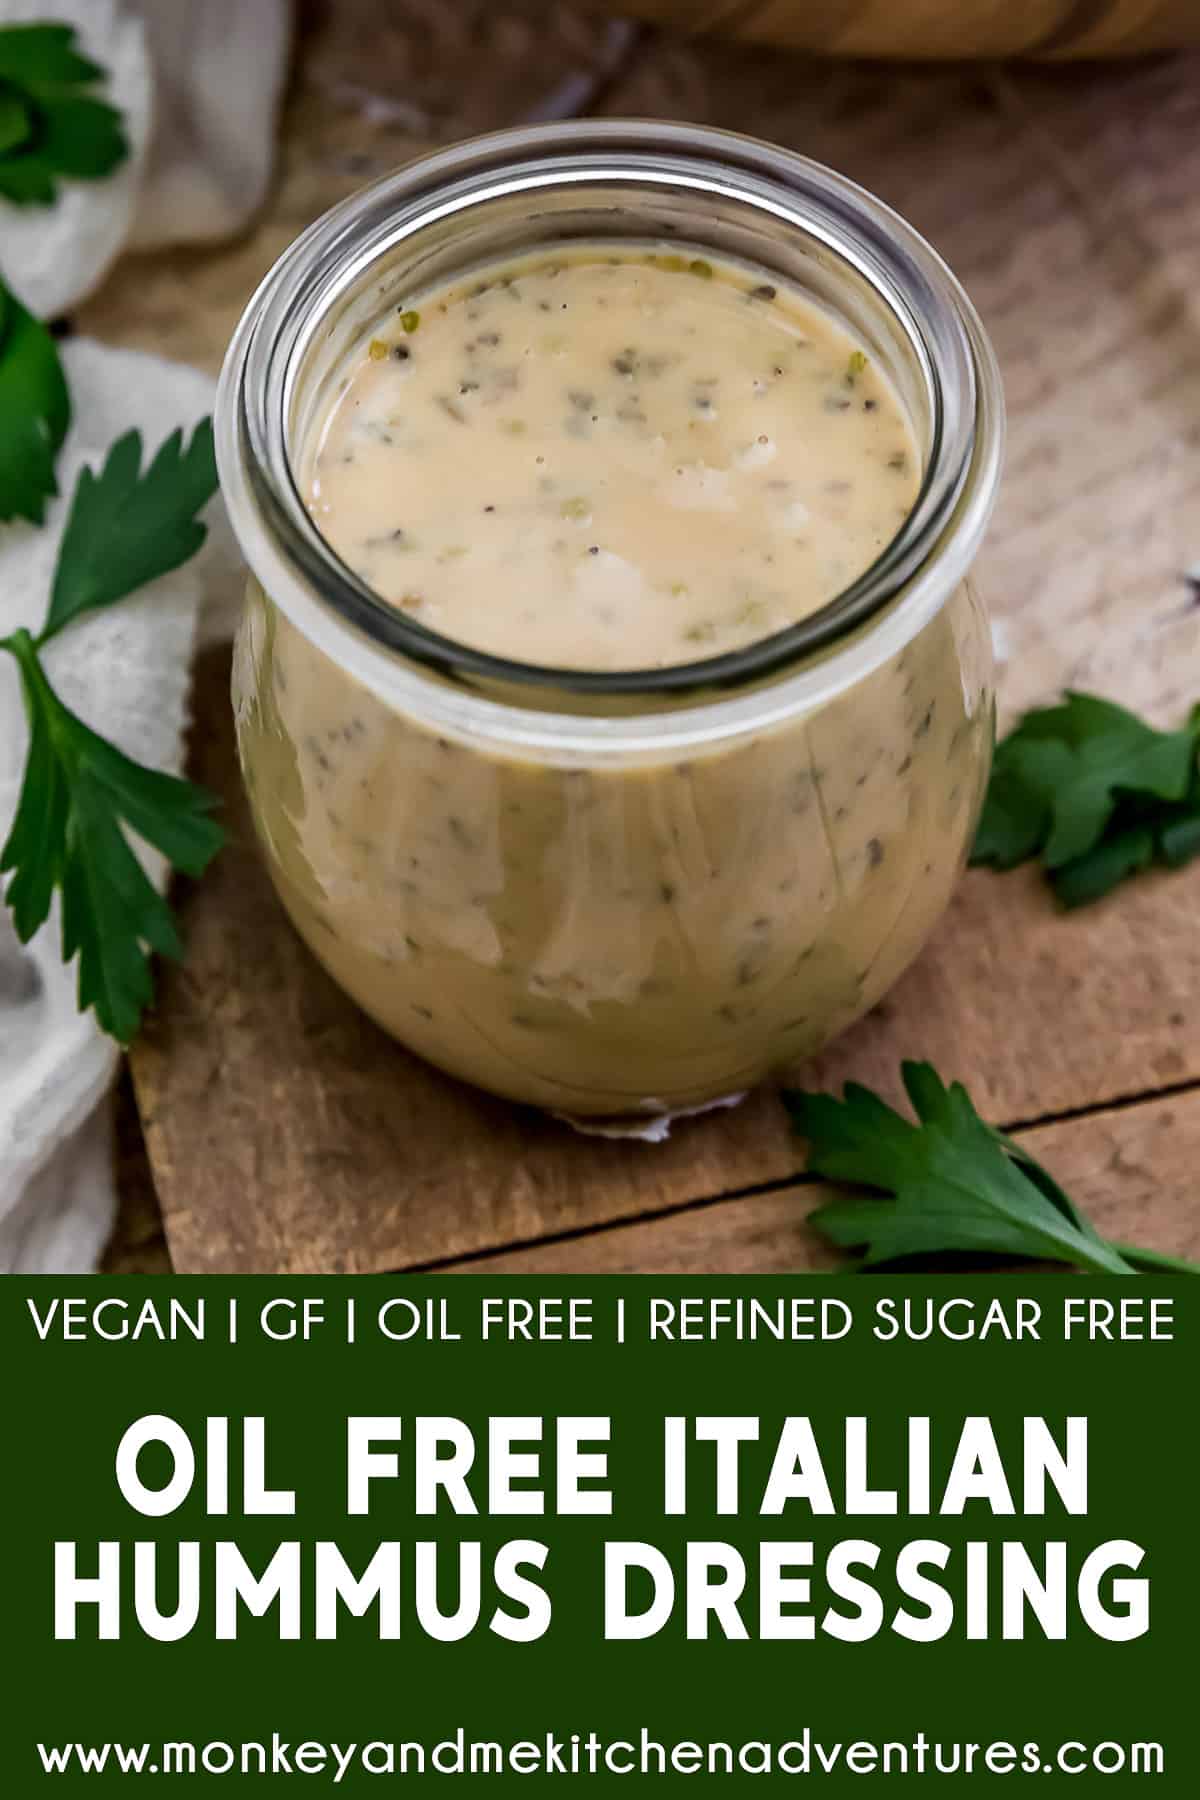 Oil Free Italian Hummus Dressing with text description